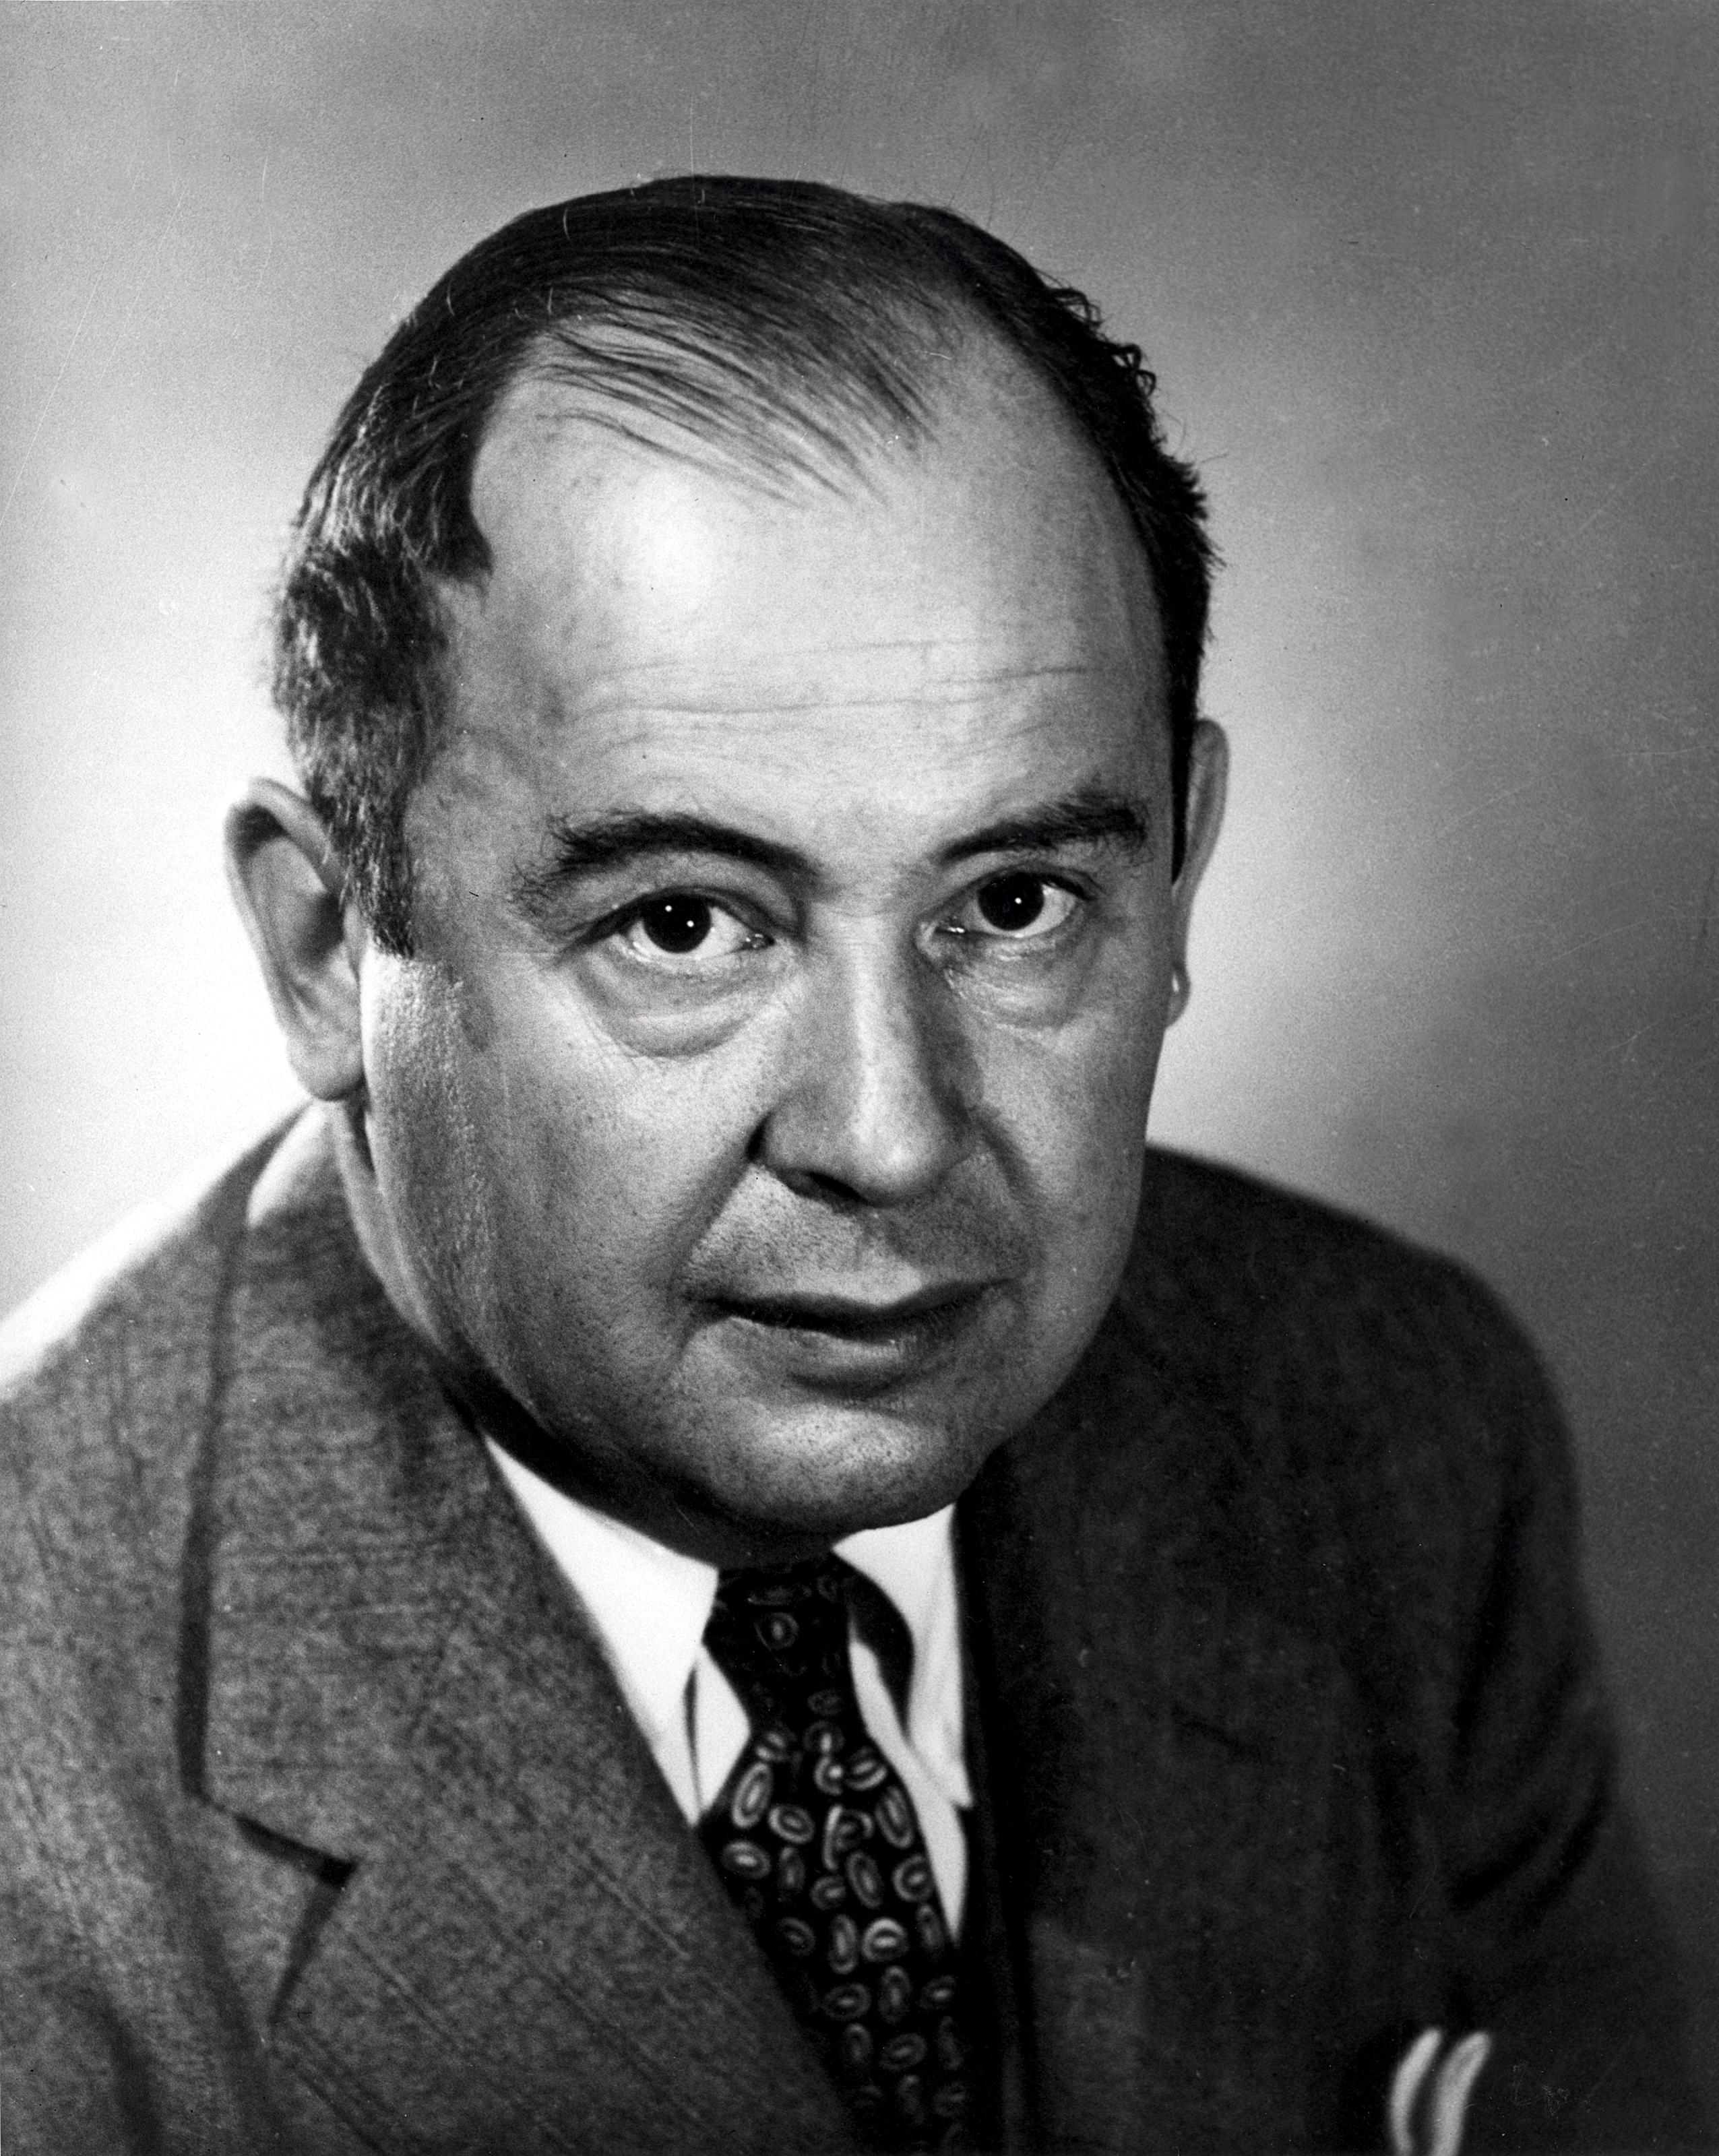 Old black and white photo of John von Neumann.